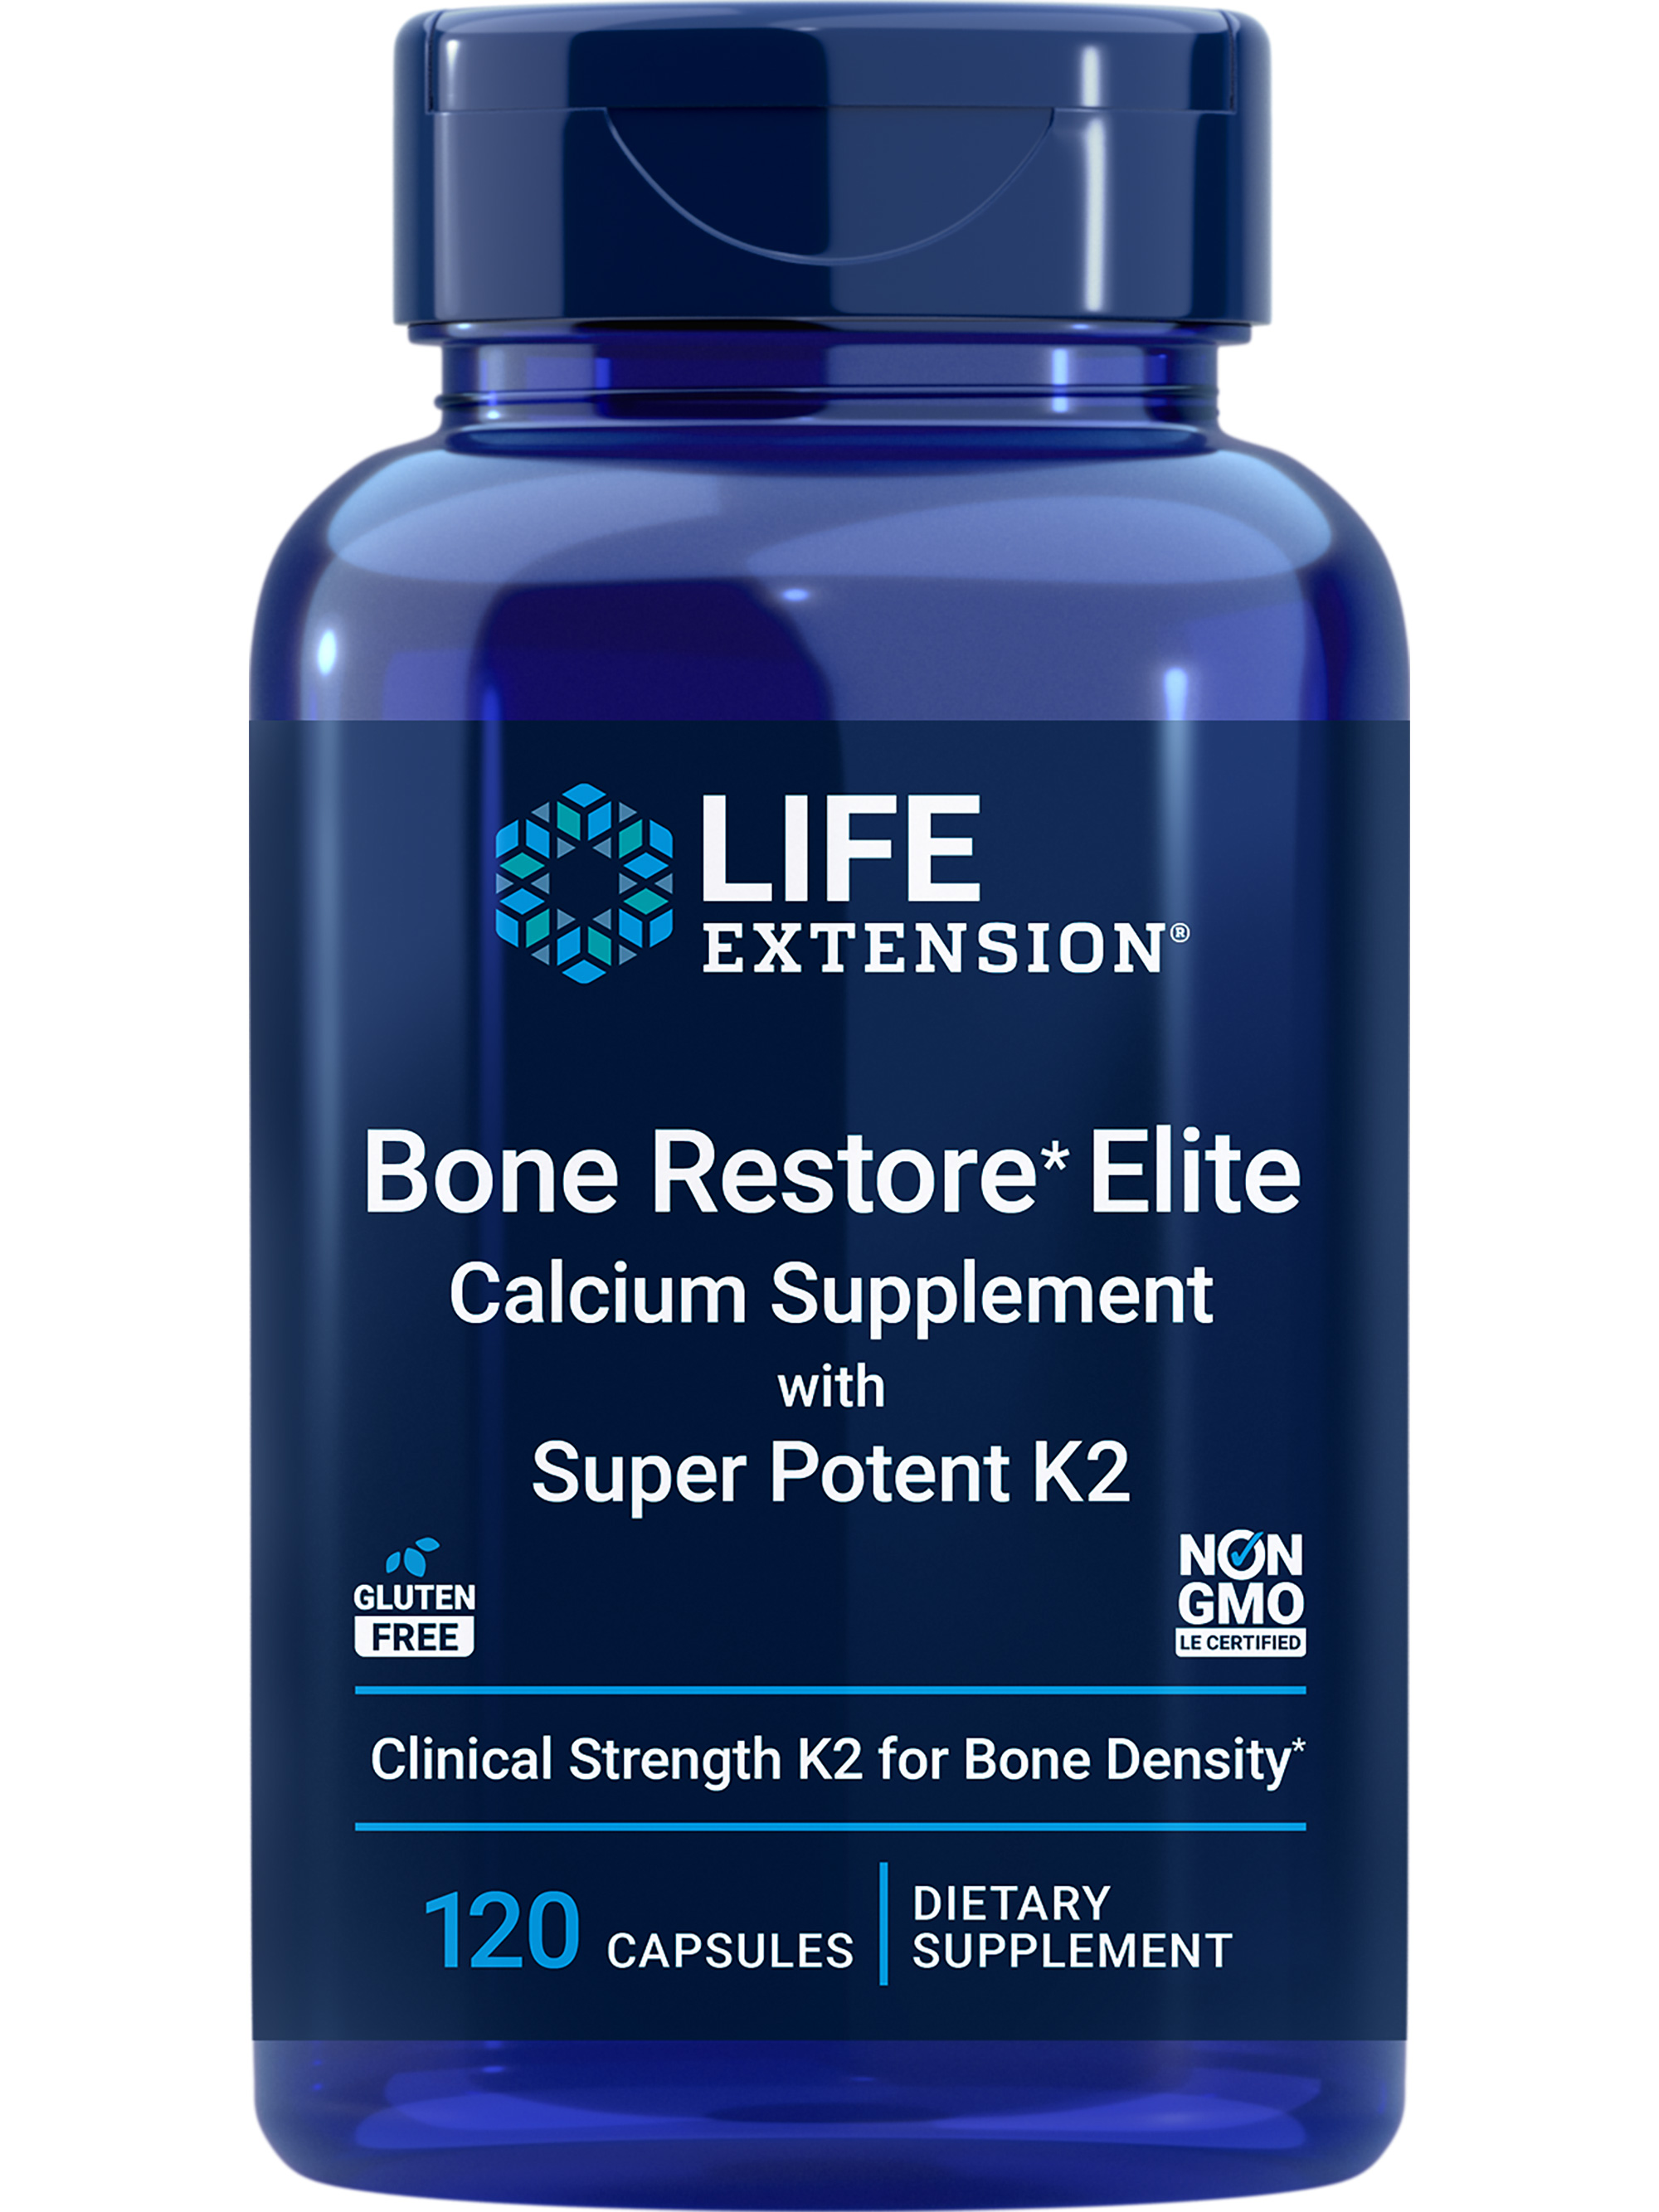 Life Extension Bone Restore Elite with Super Potent K2 - Clinically Studied Vitamin K2 Dose & Calcium, Promotes Bone Health & Density - Gluten-Free, Non-GMO - 120 Capsules - image 1 of 8